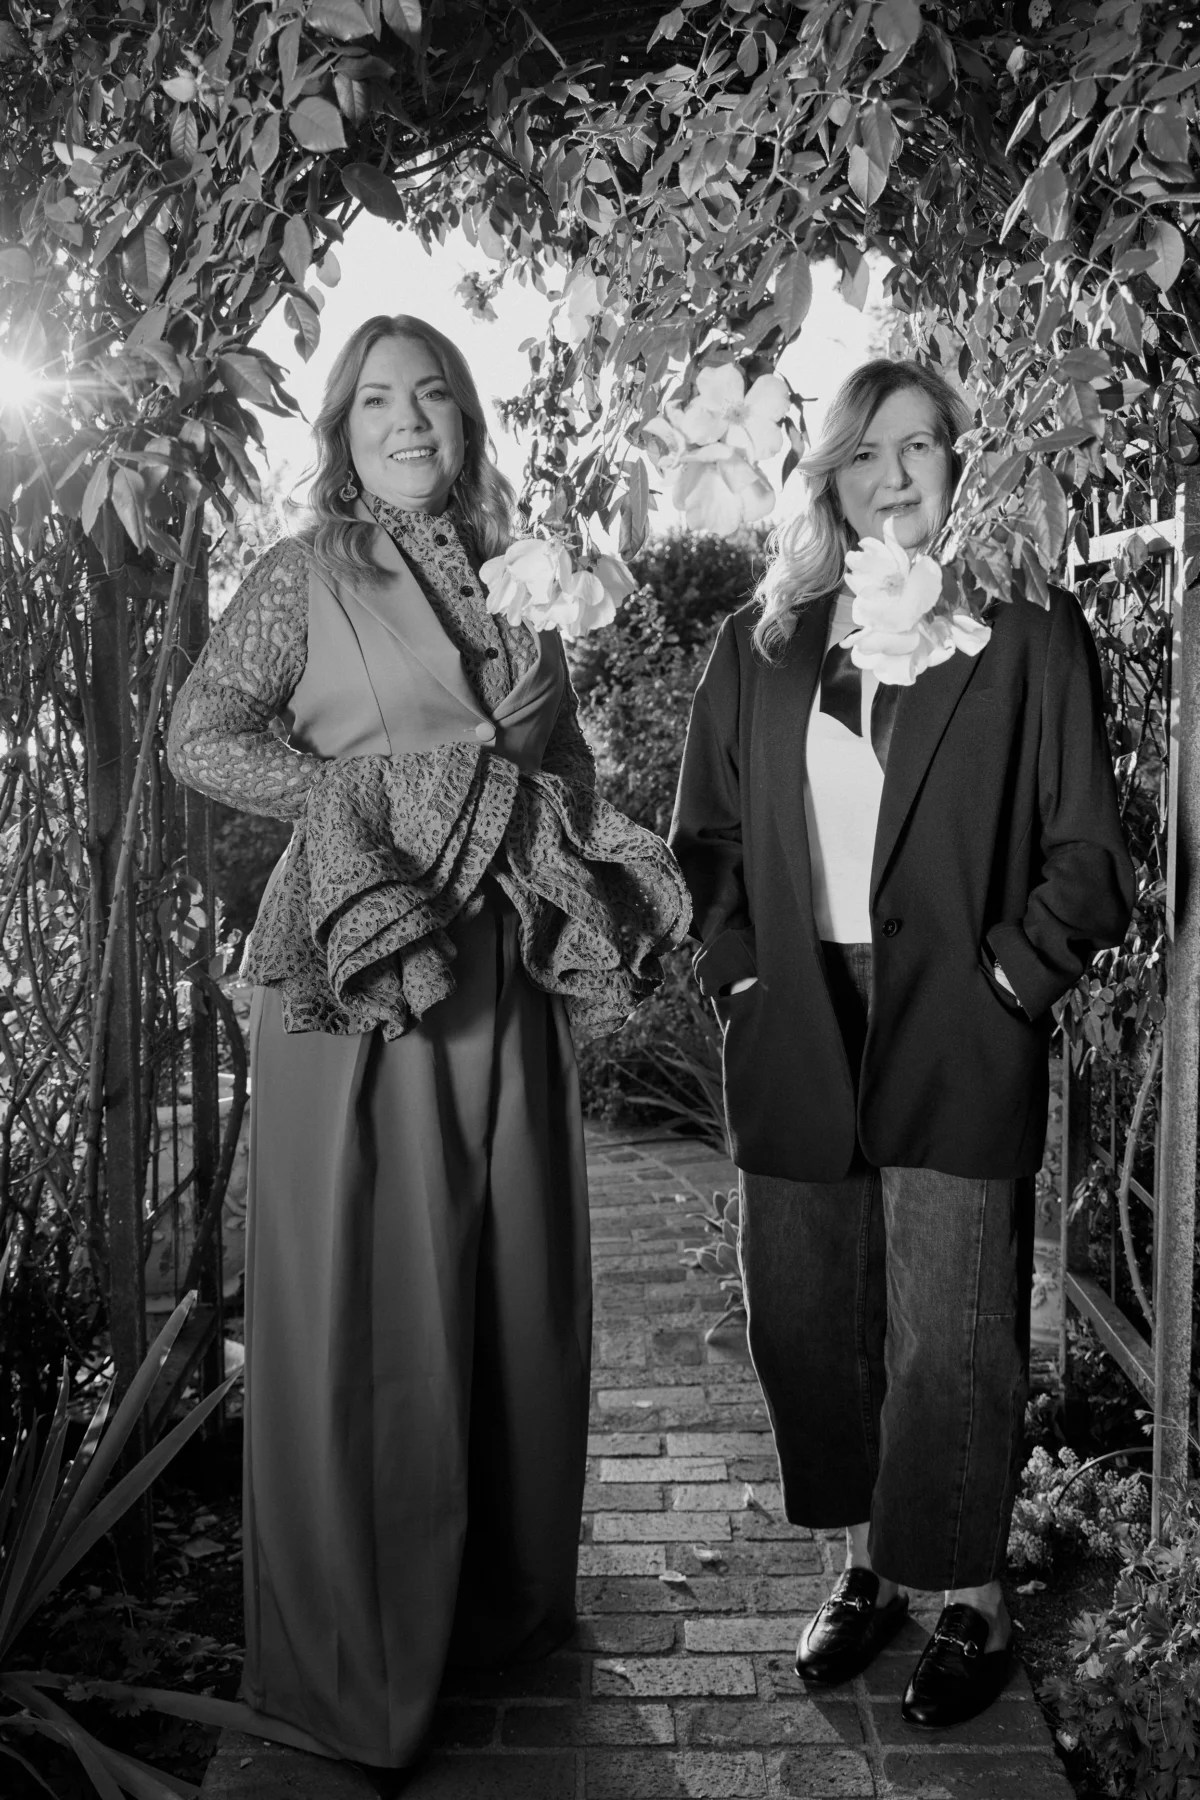 Rene Haynes Indigenous Casting, Killers of the Flower Moon and Jacqueline West Costume Designer, Killers of the Flower Moon